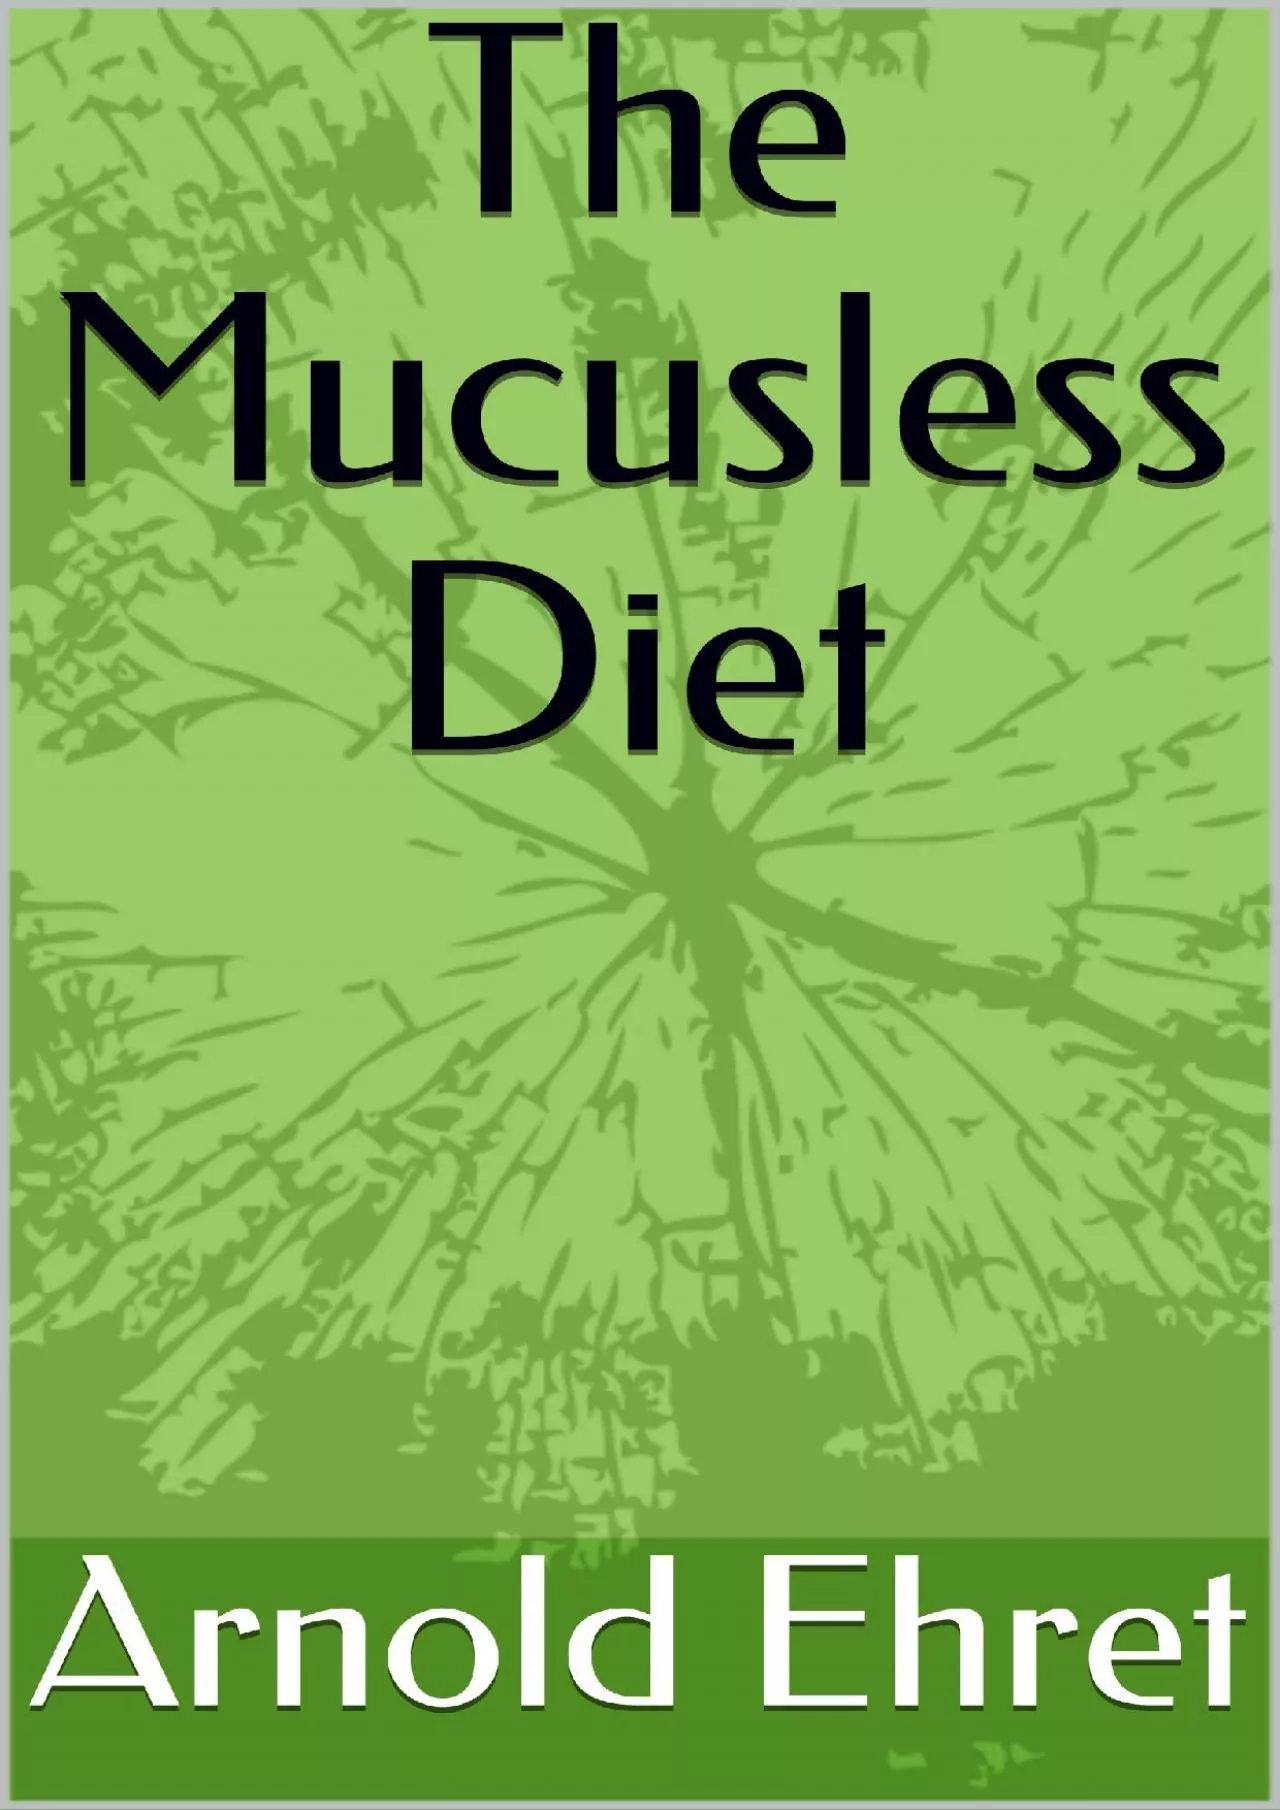 (BOOS)-Arnold Ehret’s The Mucusless Diet Healing System